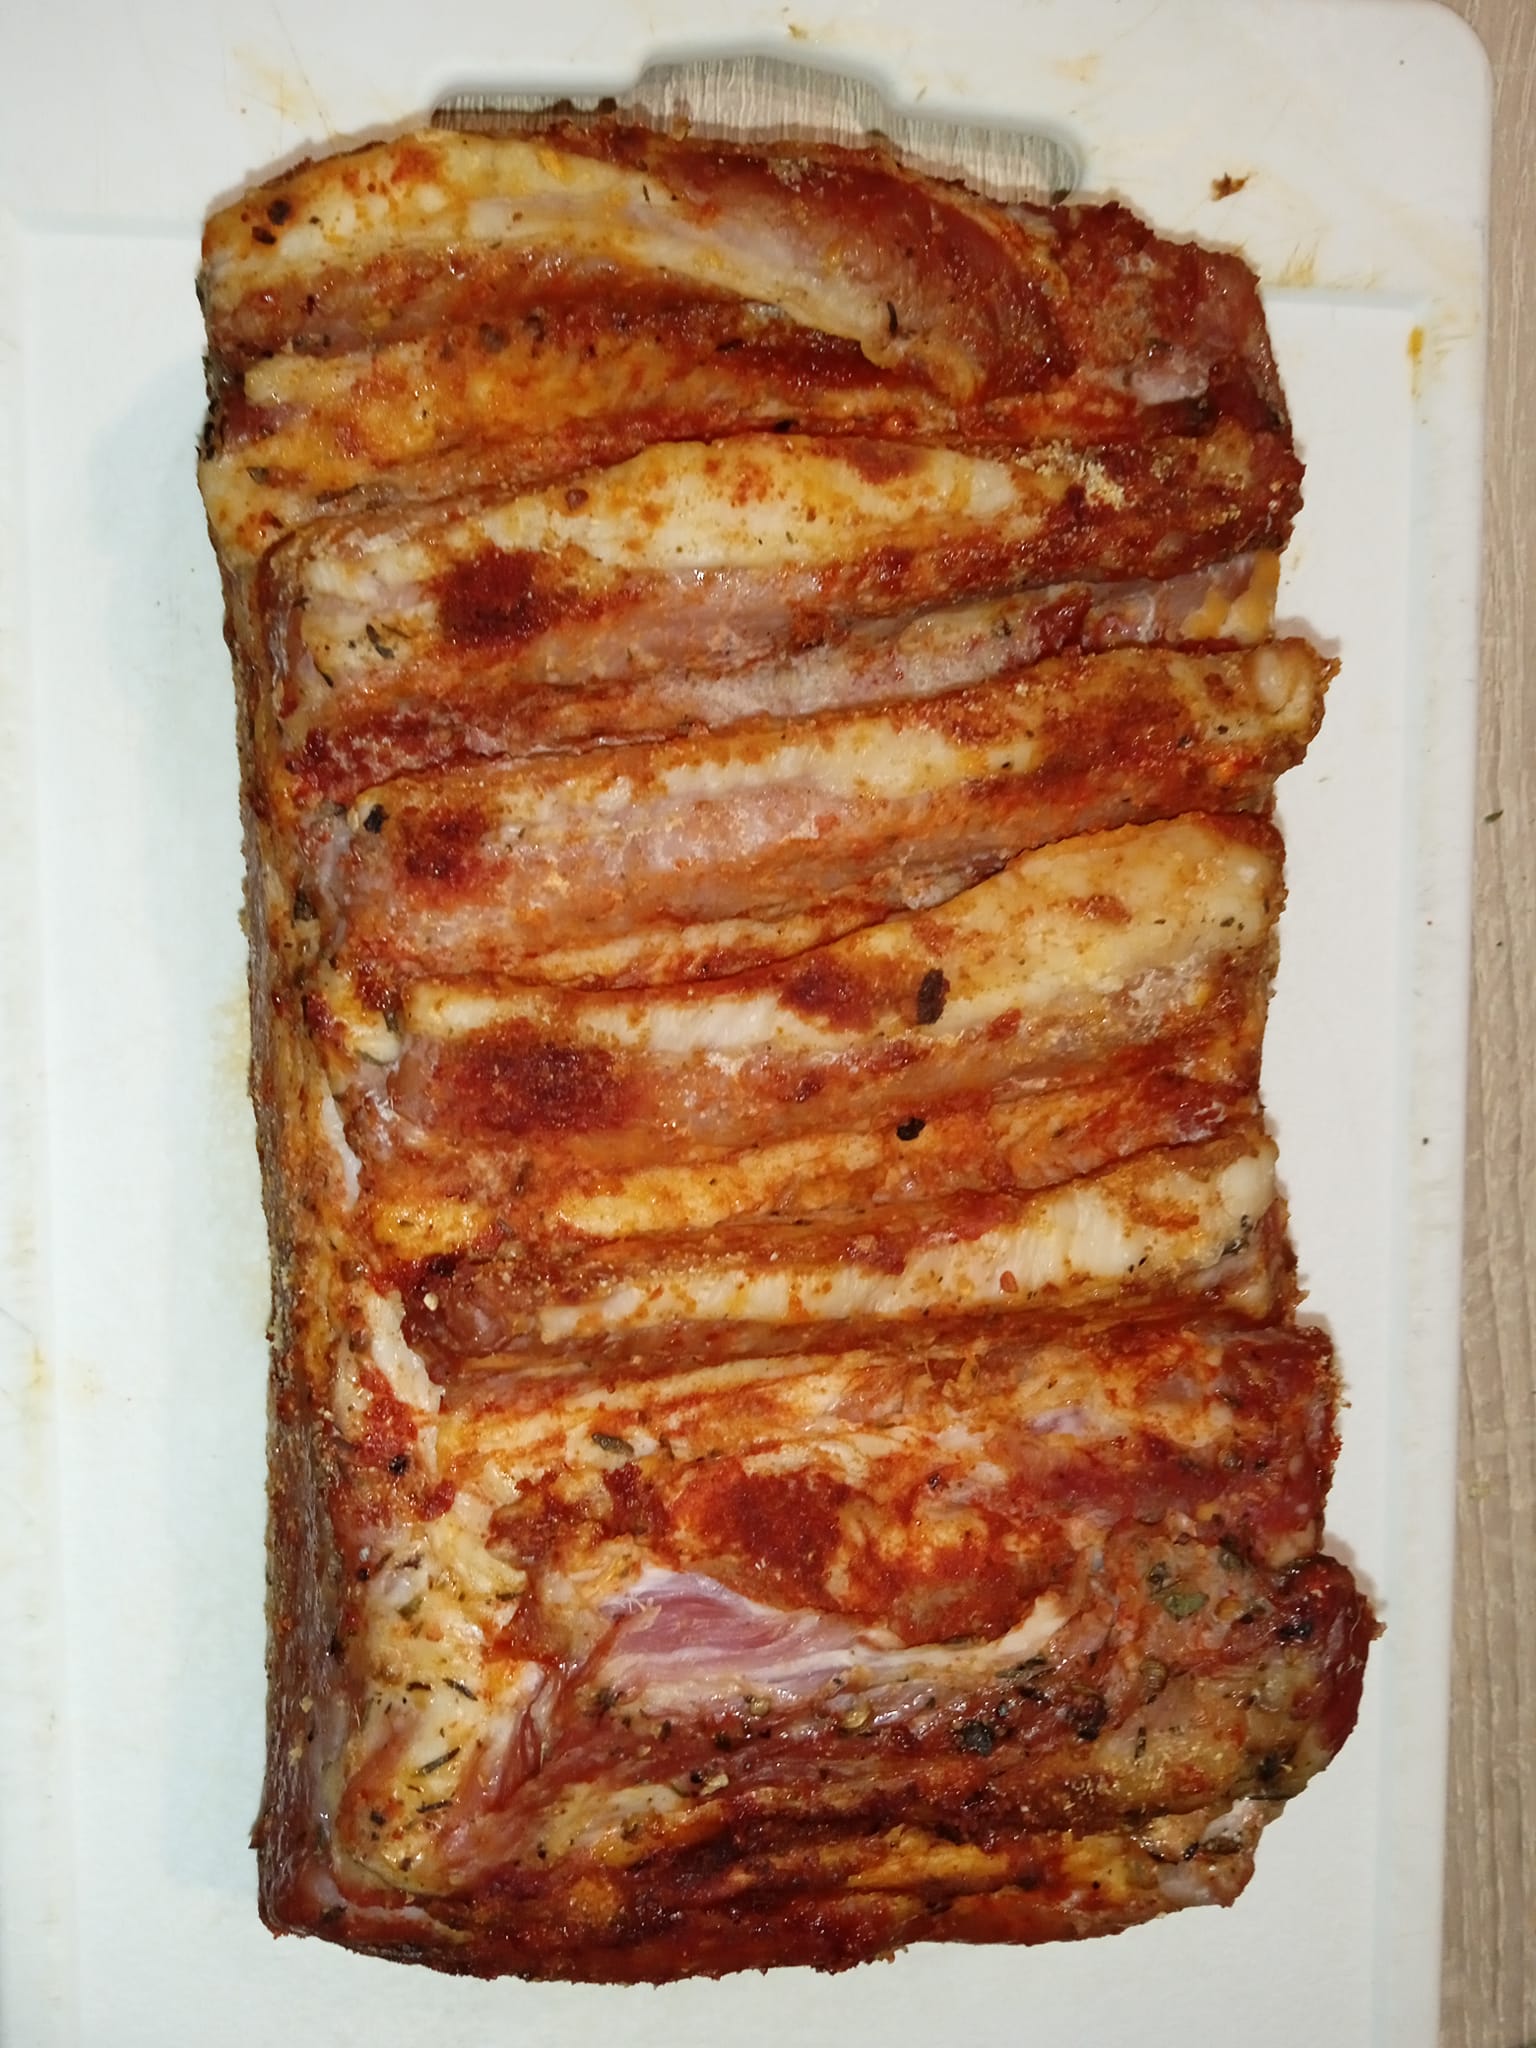 bacon1.jpg